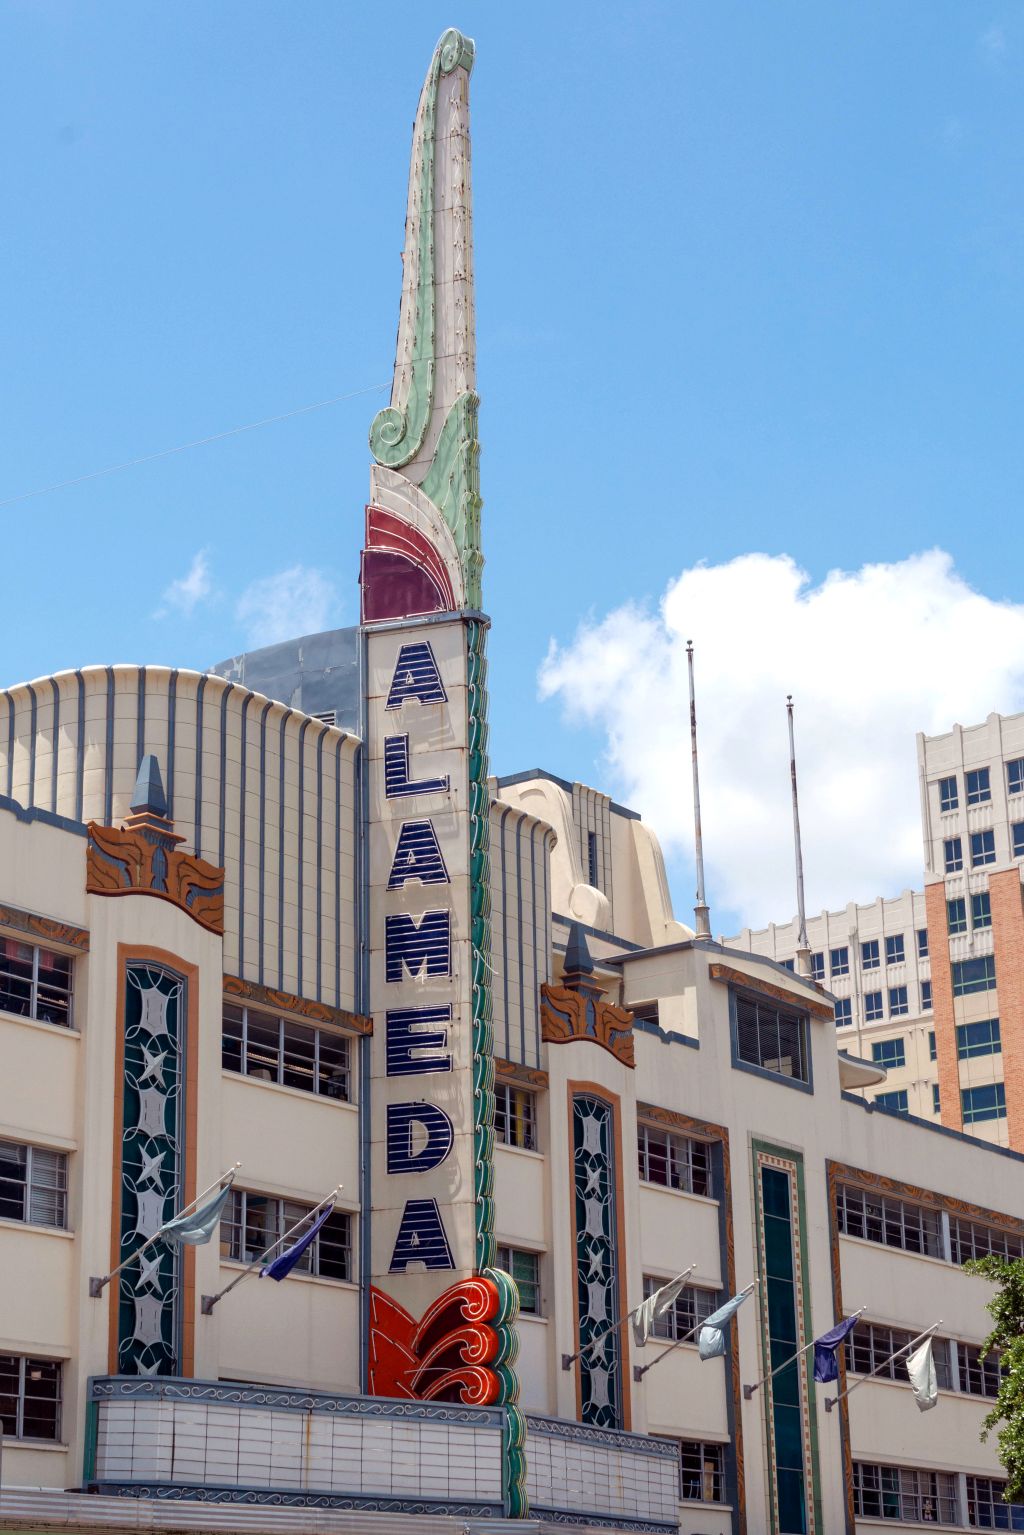 The Alameda Theater